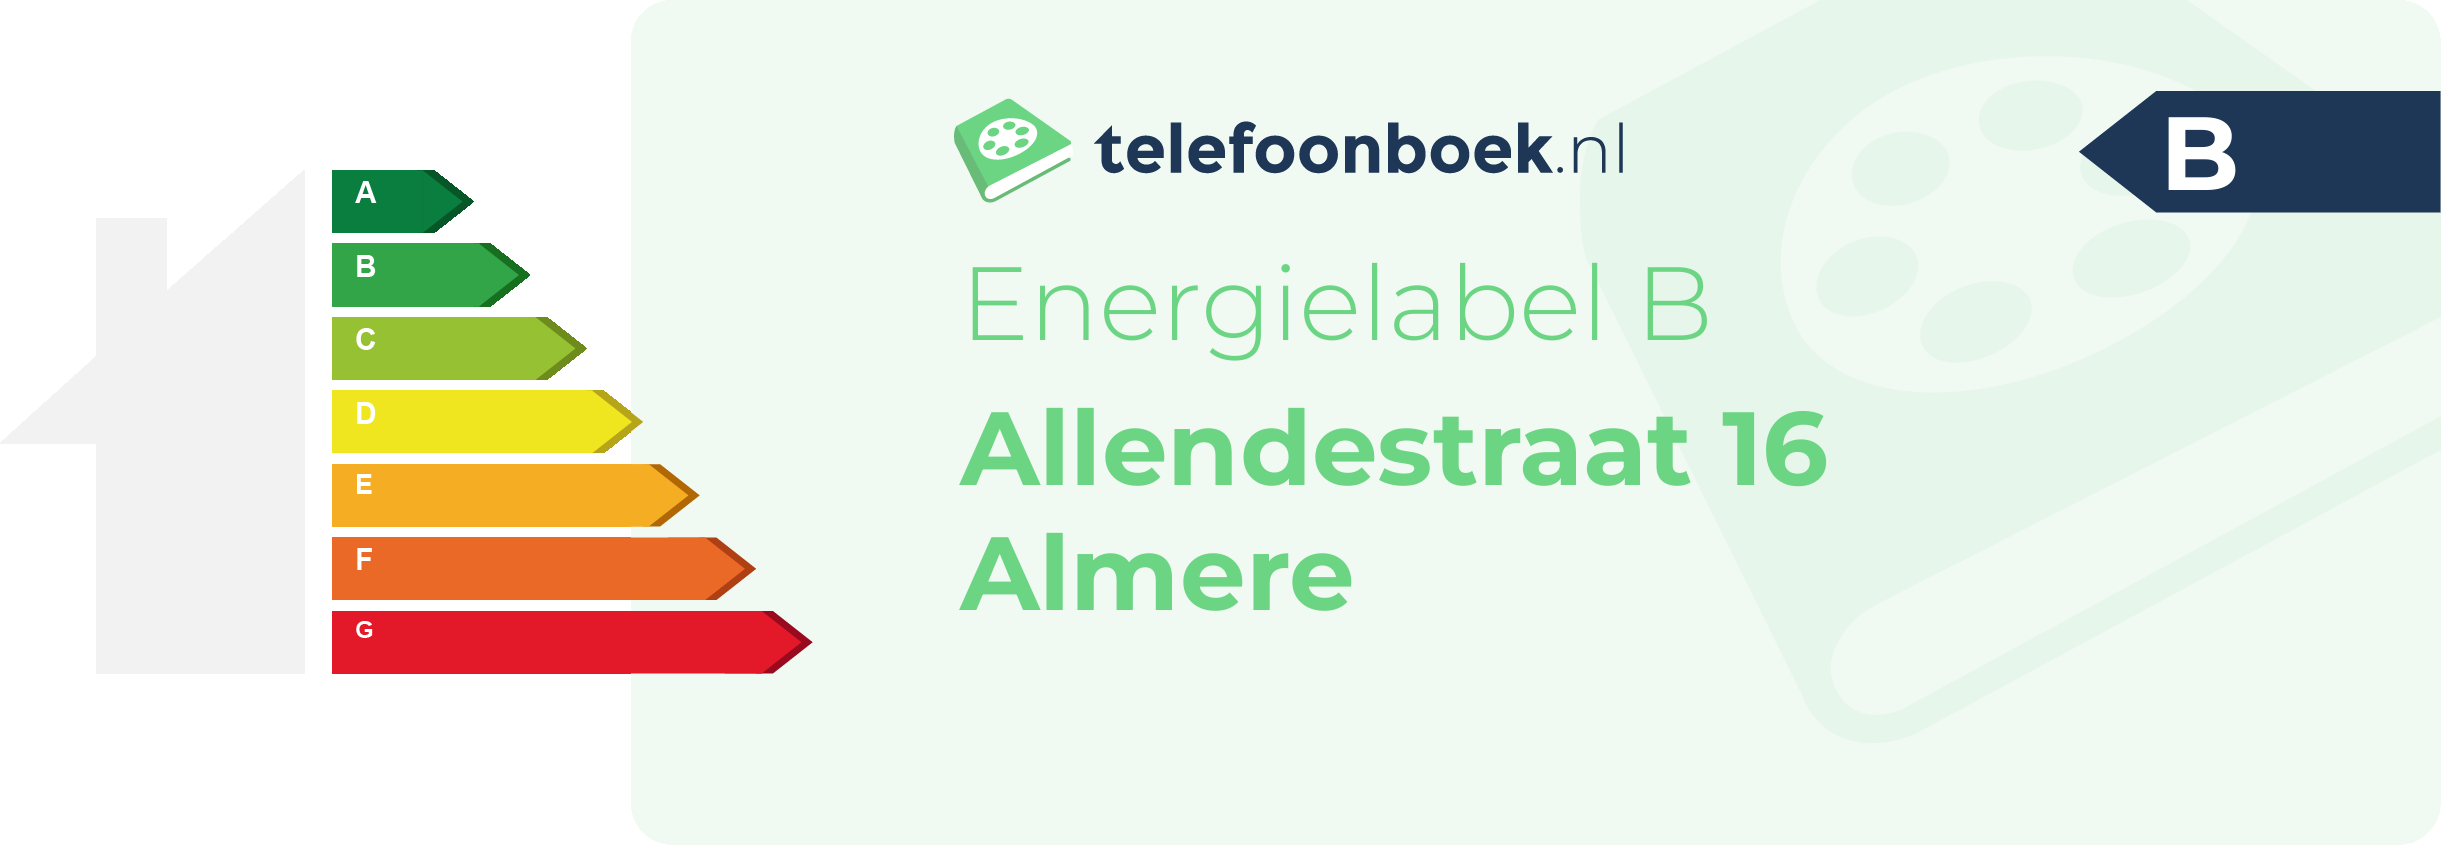 Energielabel Allendestraat 16 Almere